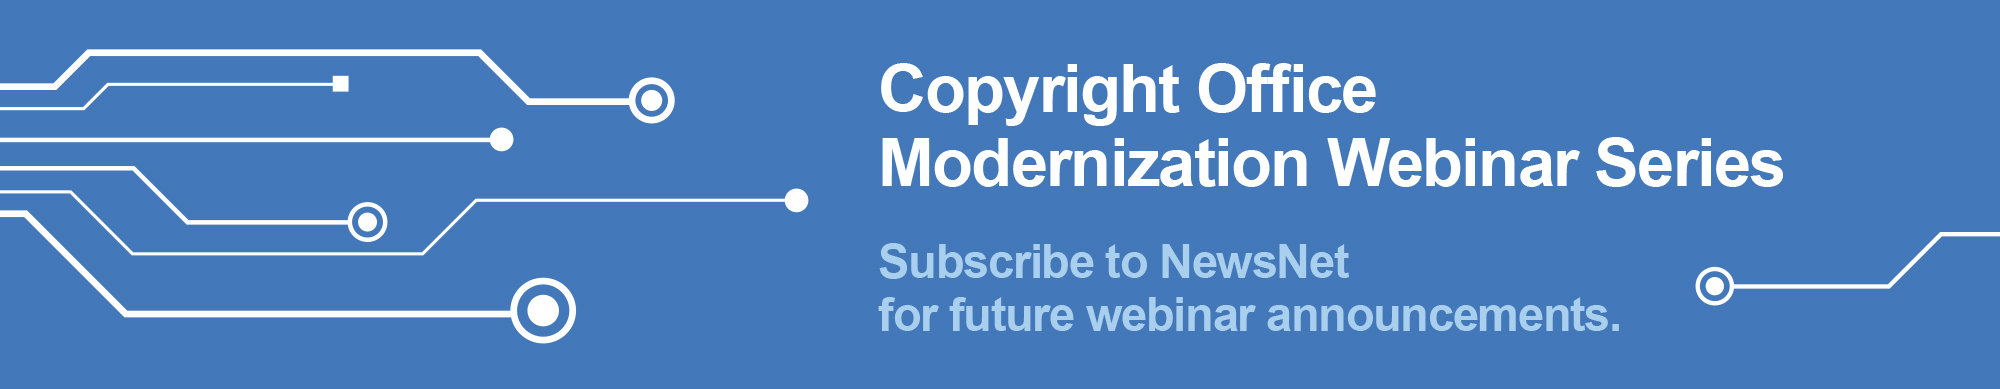 Copyright Modernization Webinar Graphic